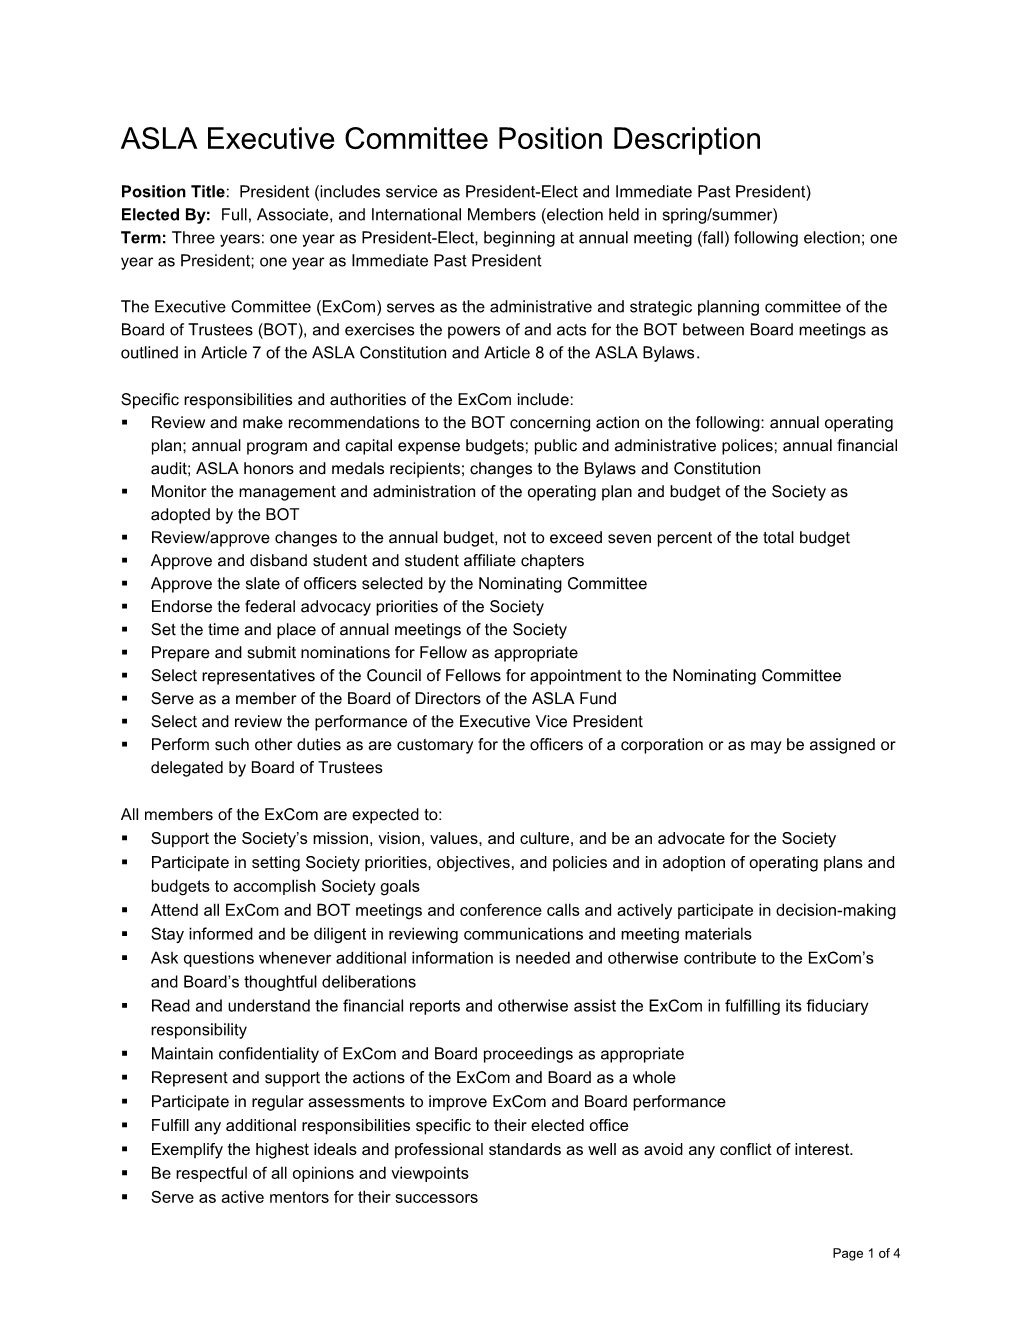 ASLA Executive Committee Position Description s1